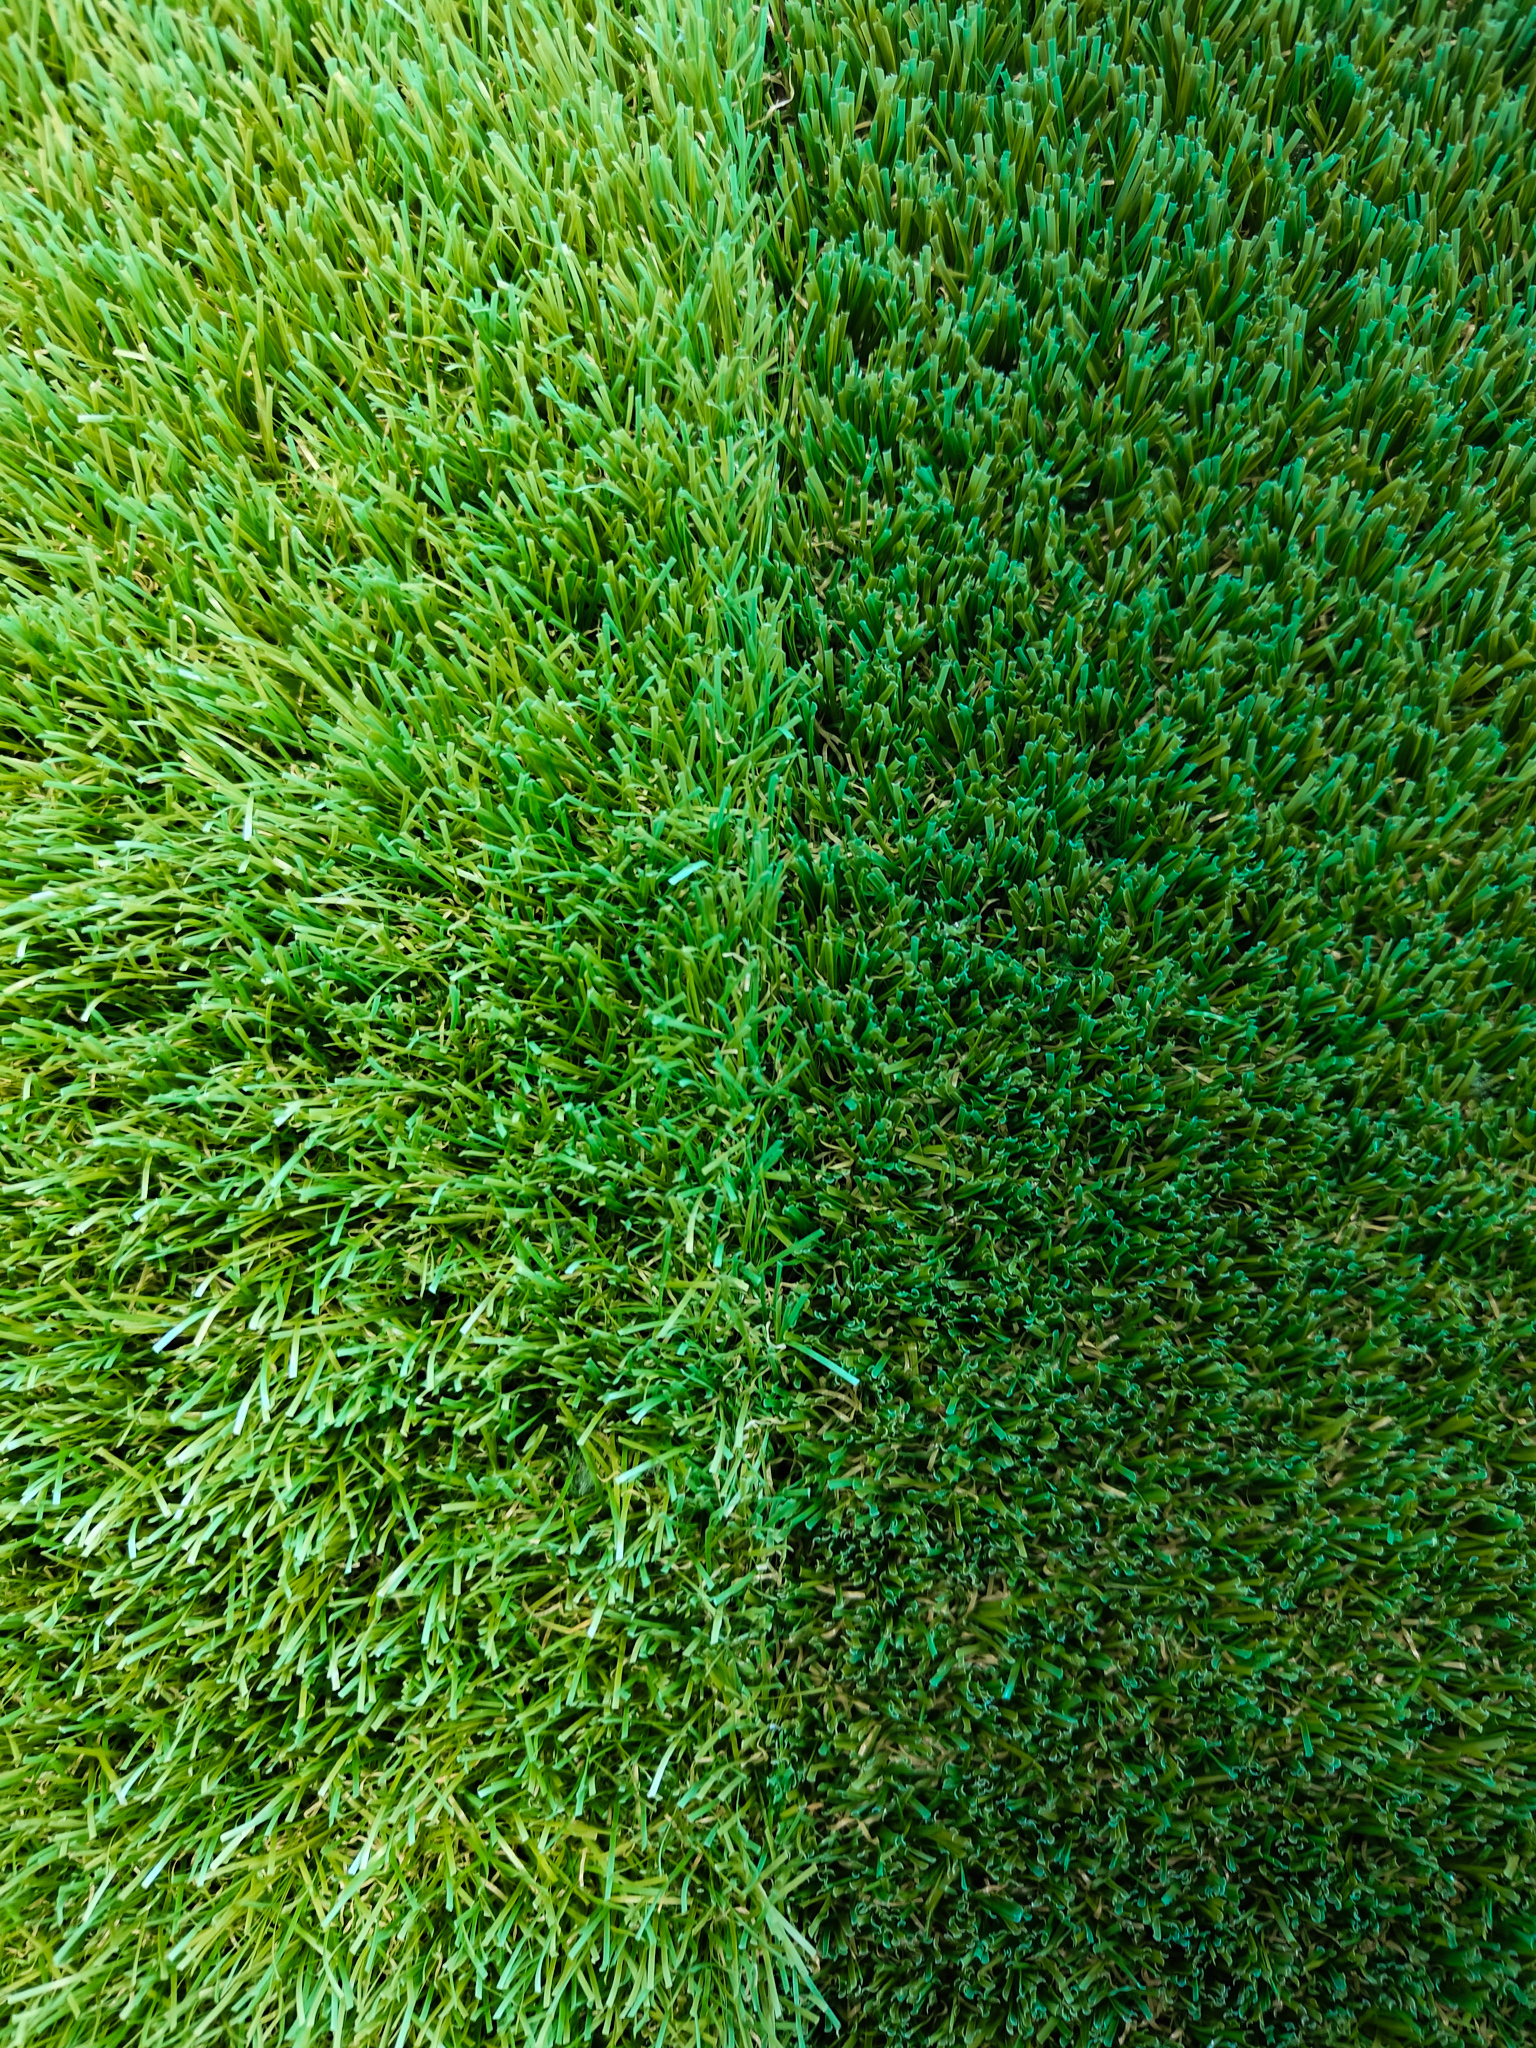 Light and dark artificial grass comparison